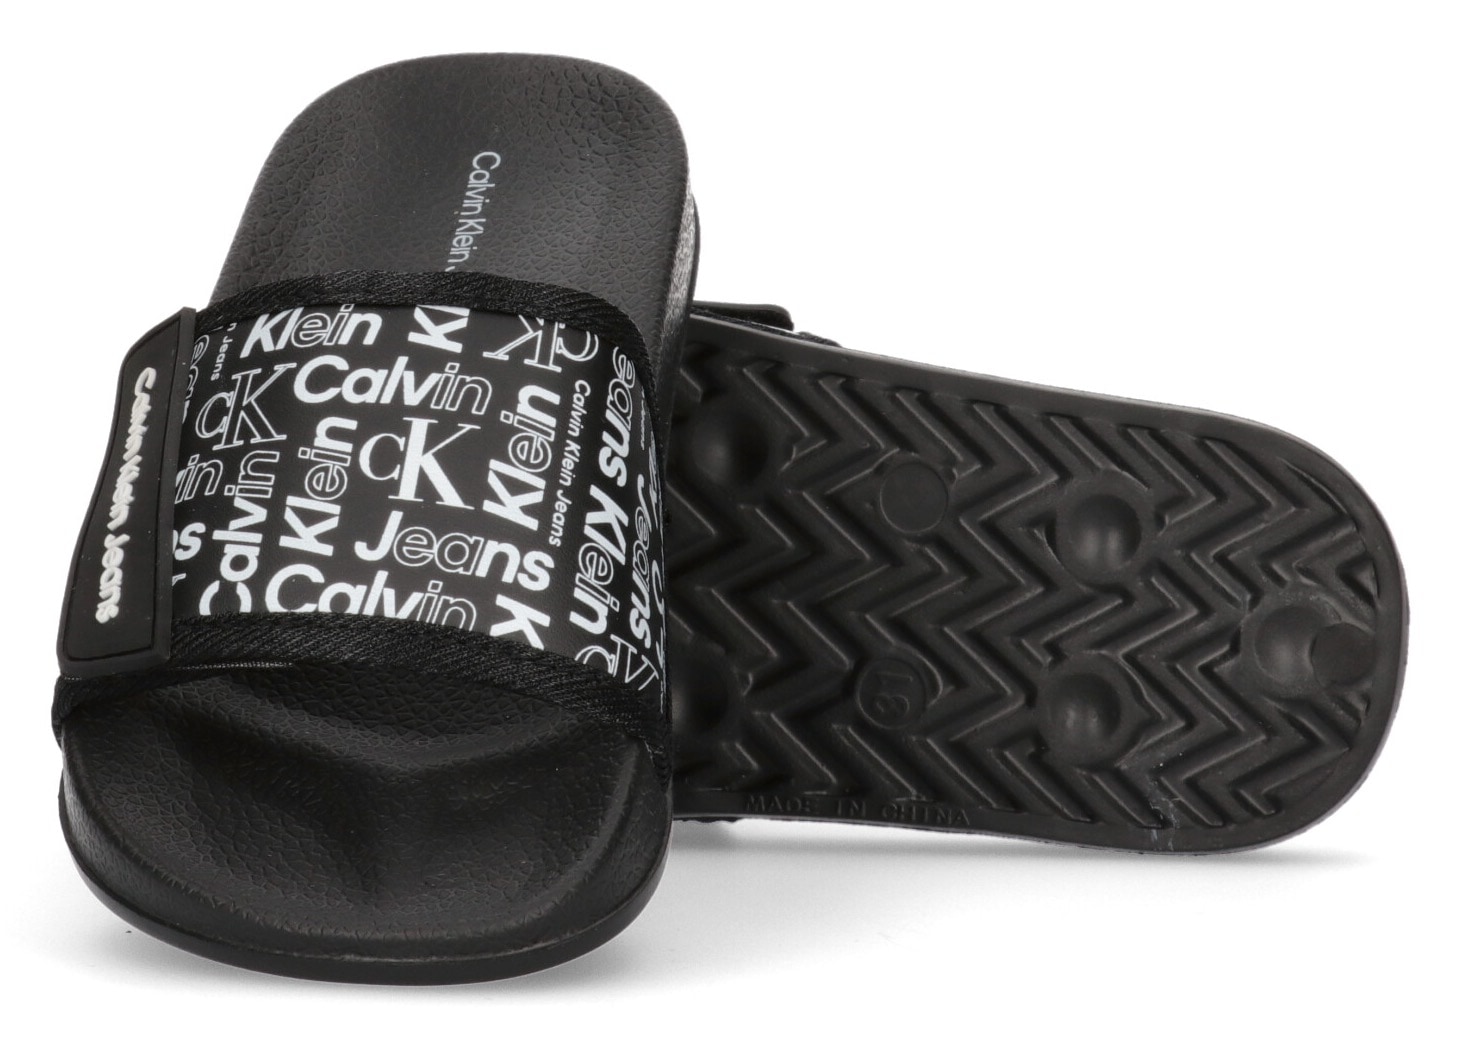 Calvin Klein Jeans Badepantolette »AOP POOL SLIDE«, Sommerschuh, Schlappen, Badeschuh, Poolslides mit Logoschriftzügen